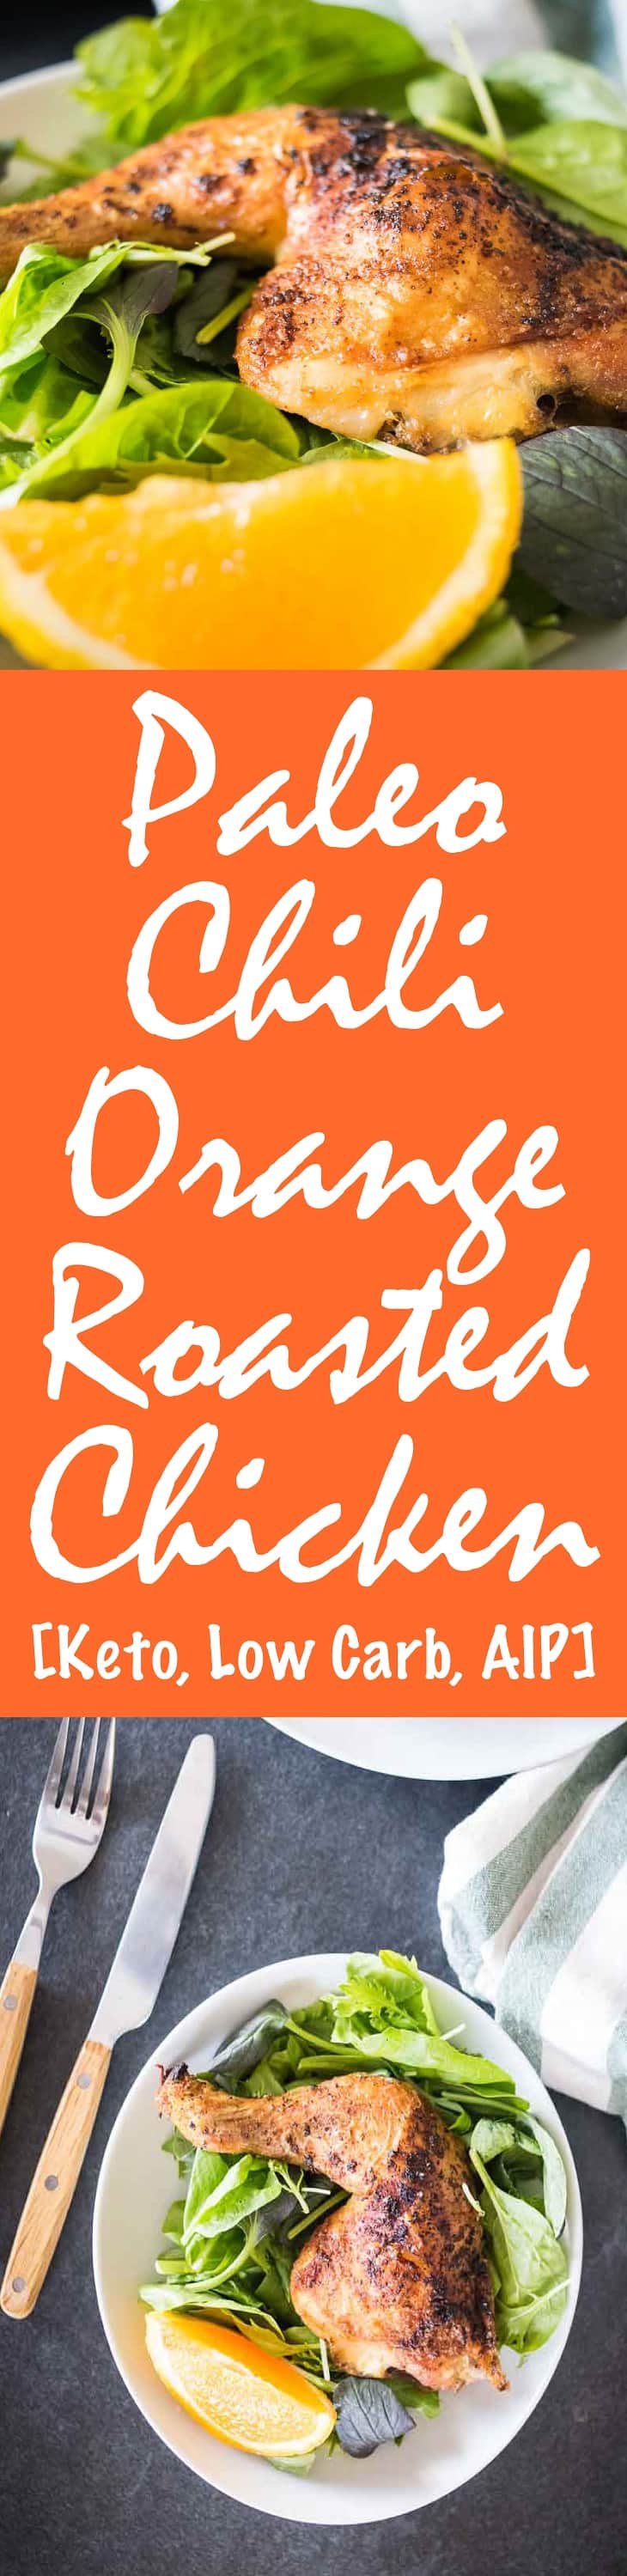 Paleo Chili Orange Roasted Chicken Recipe [Keto, Low Carb, AIP] #paleo #keto #aip #lowcarb- http://paleoflourish.com/paleo-chili-orange-roasted-chicken-recipe